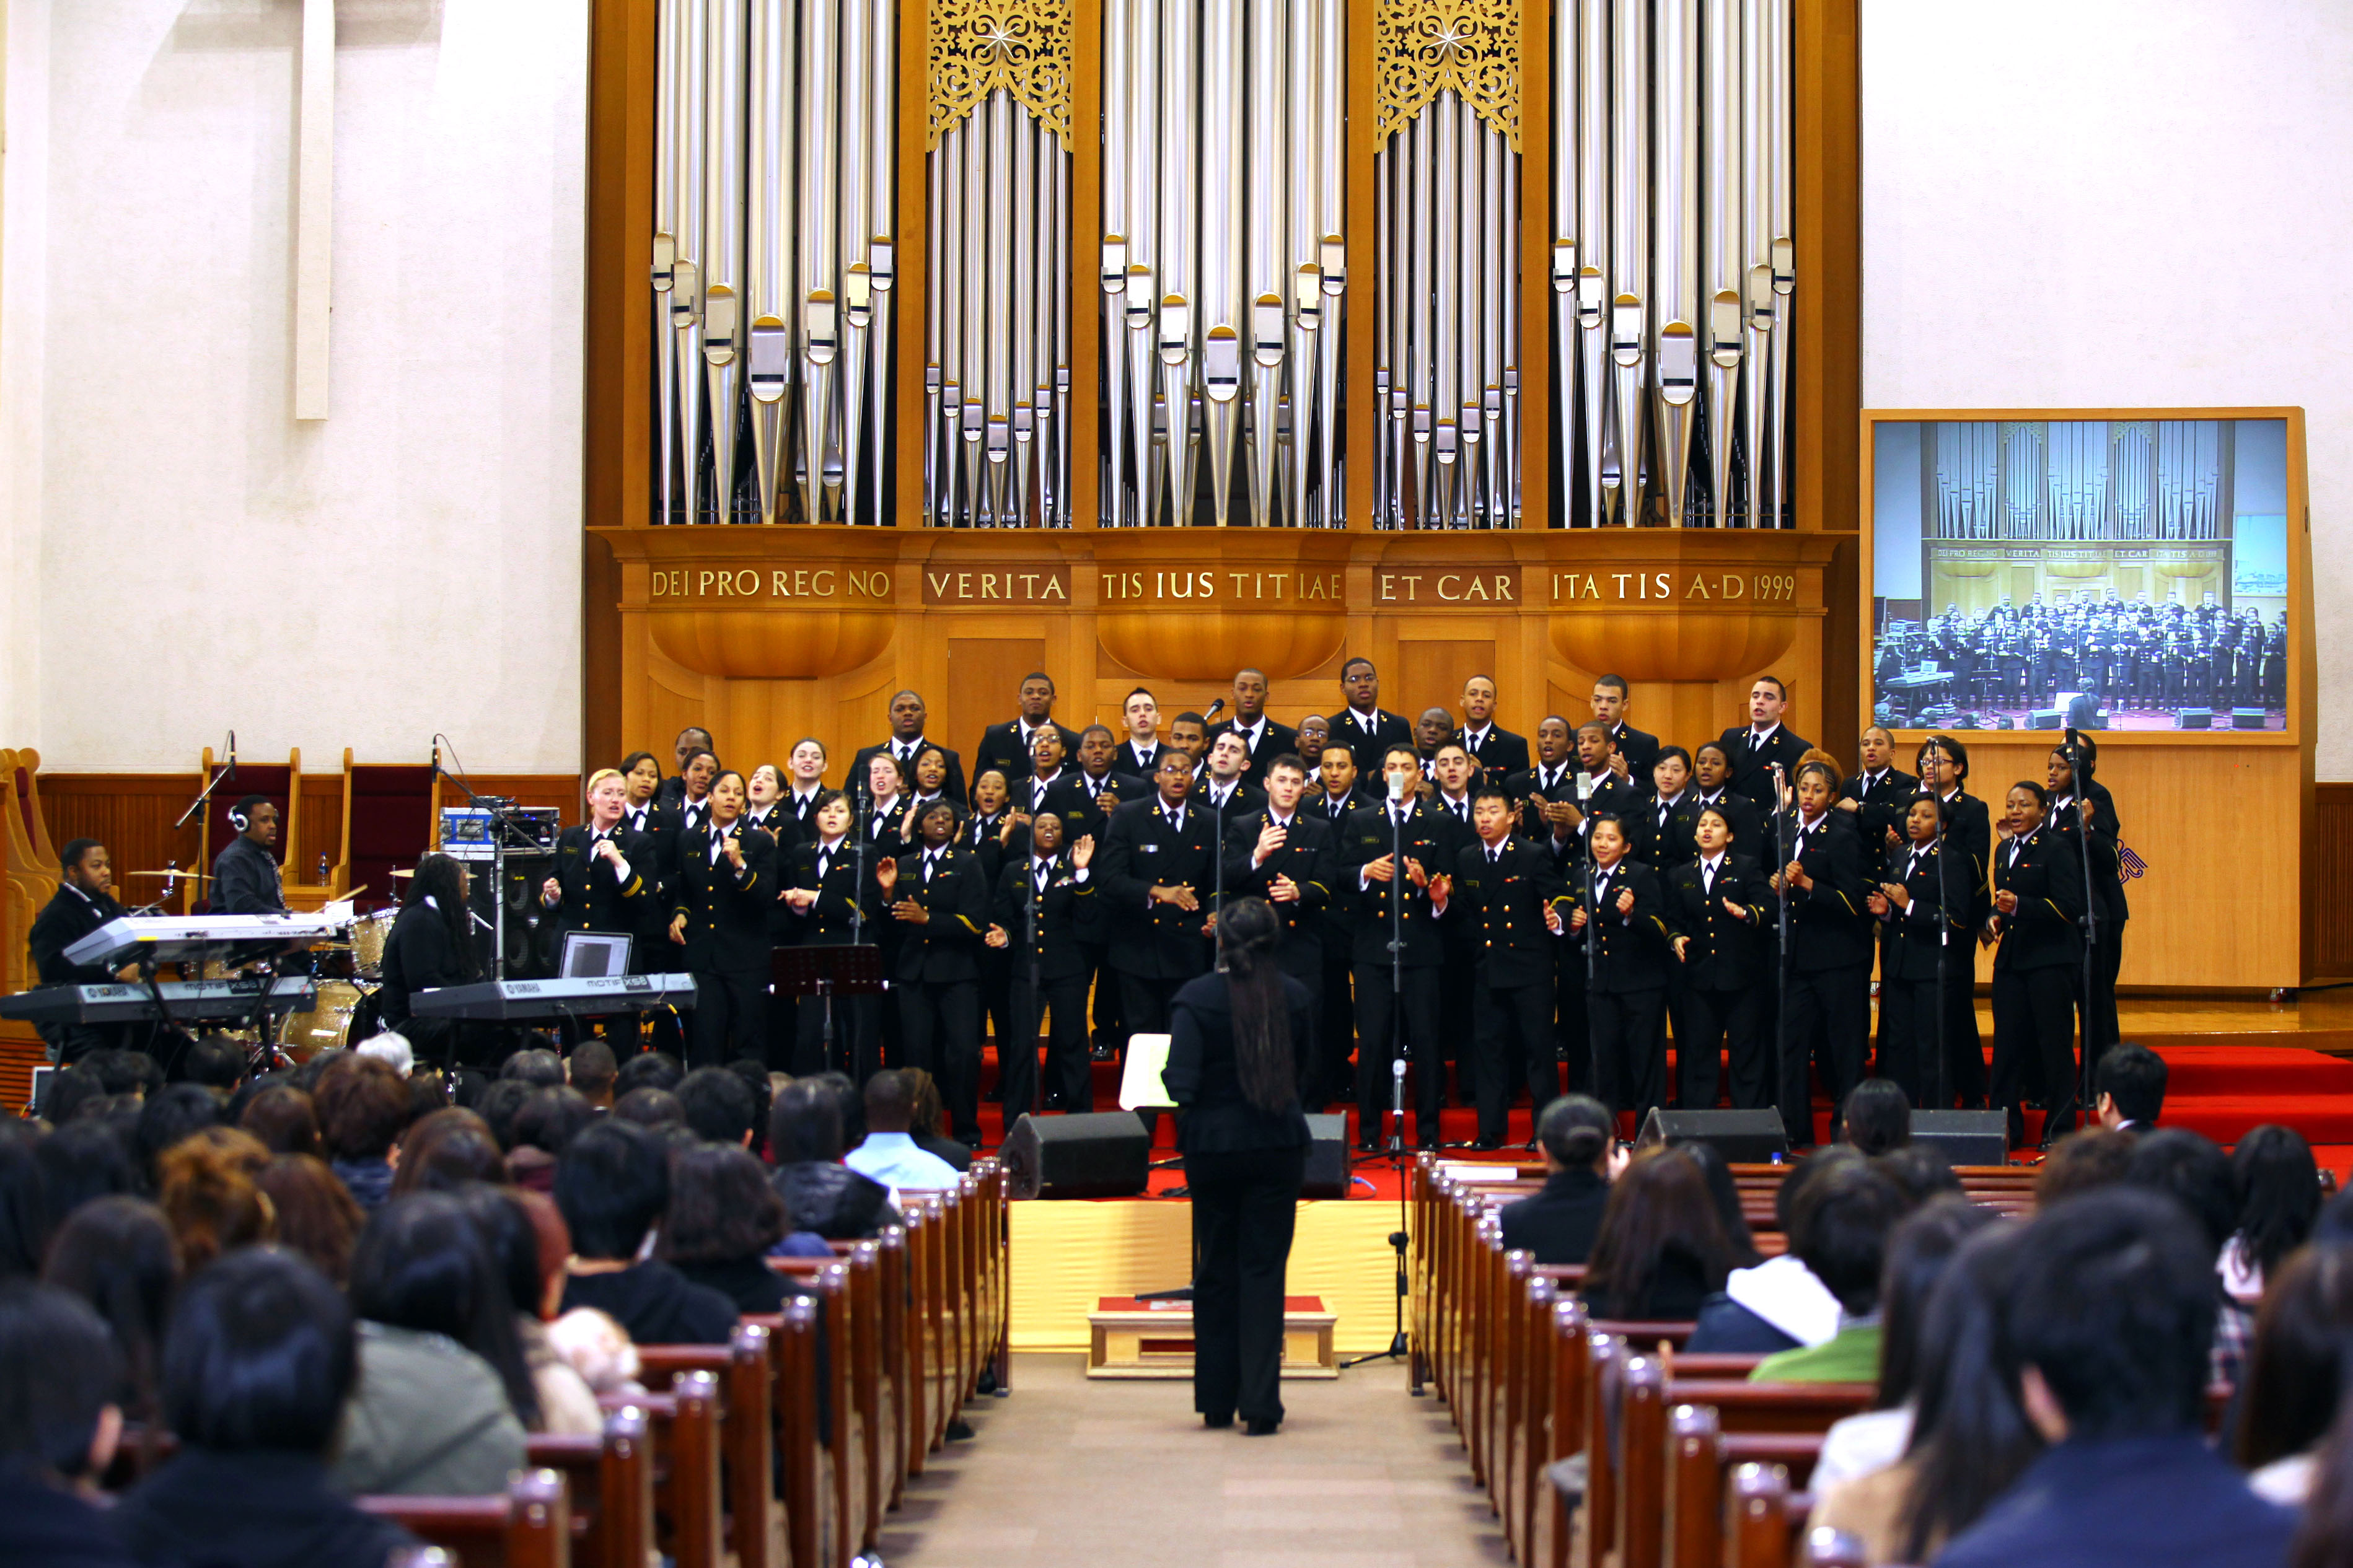 US Naval Academy Gospel Choir Performance at Keimyung University